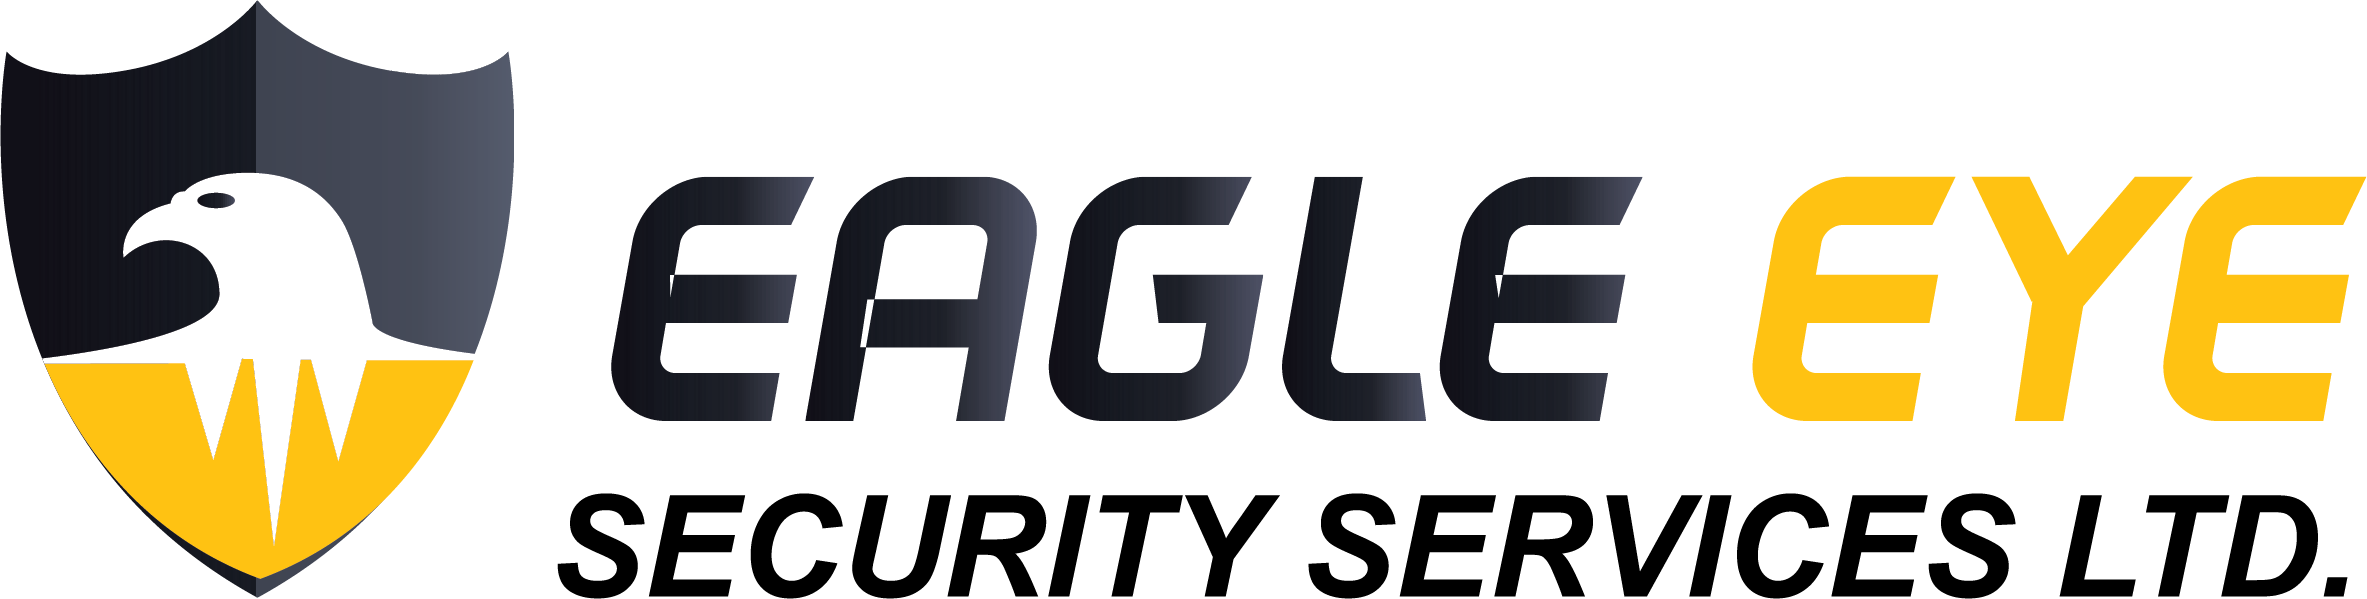 Eagle Eye Security logo